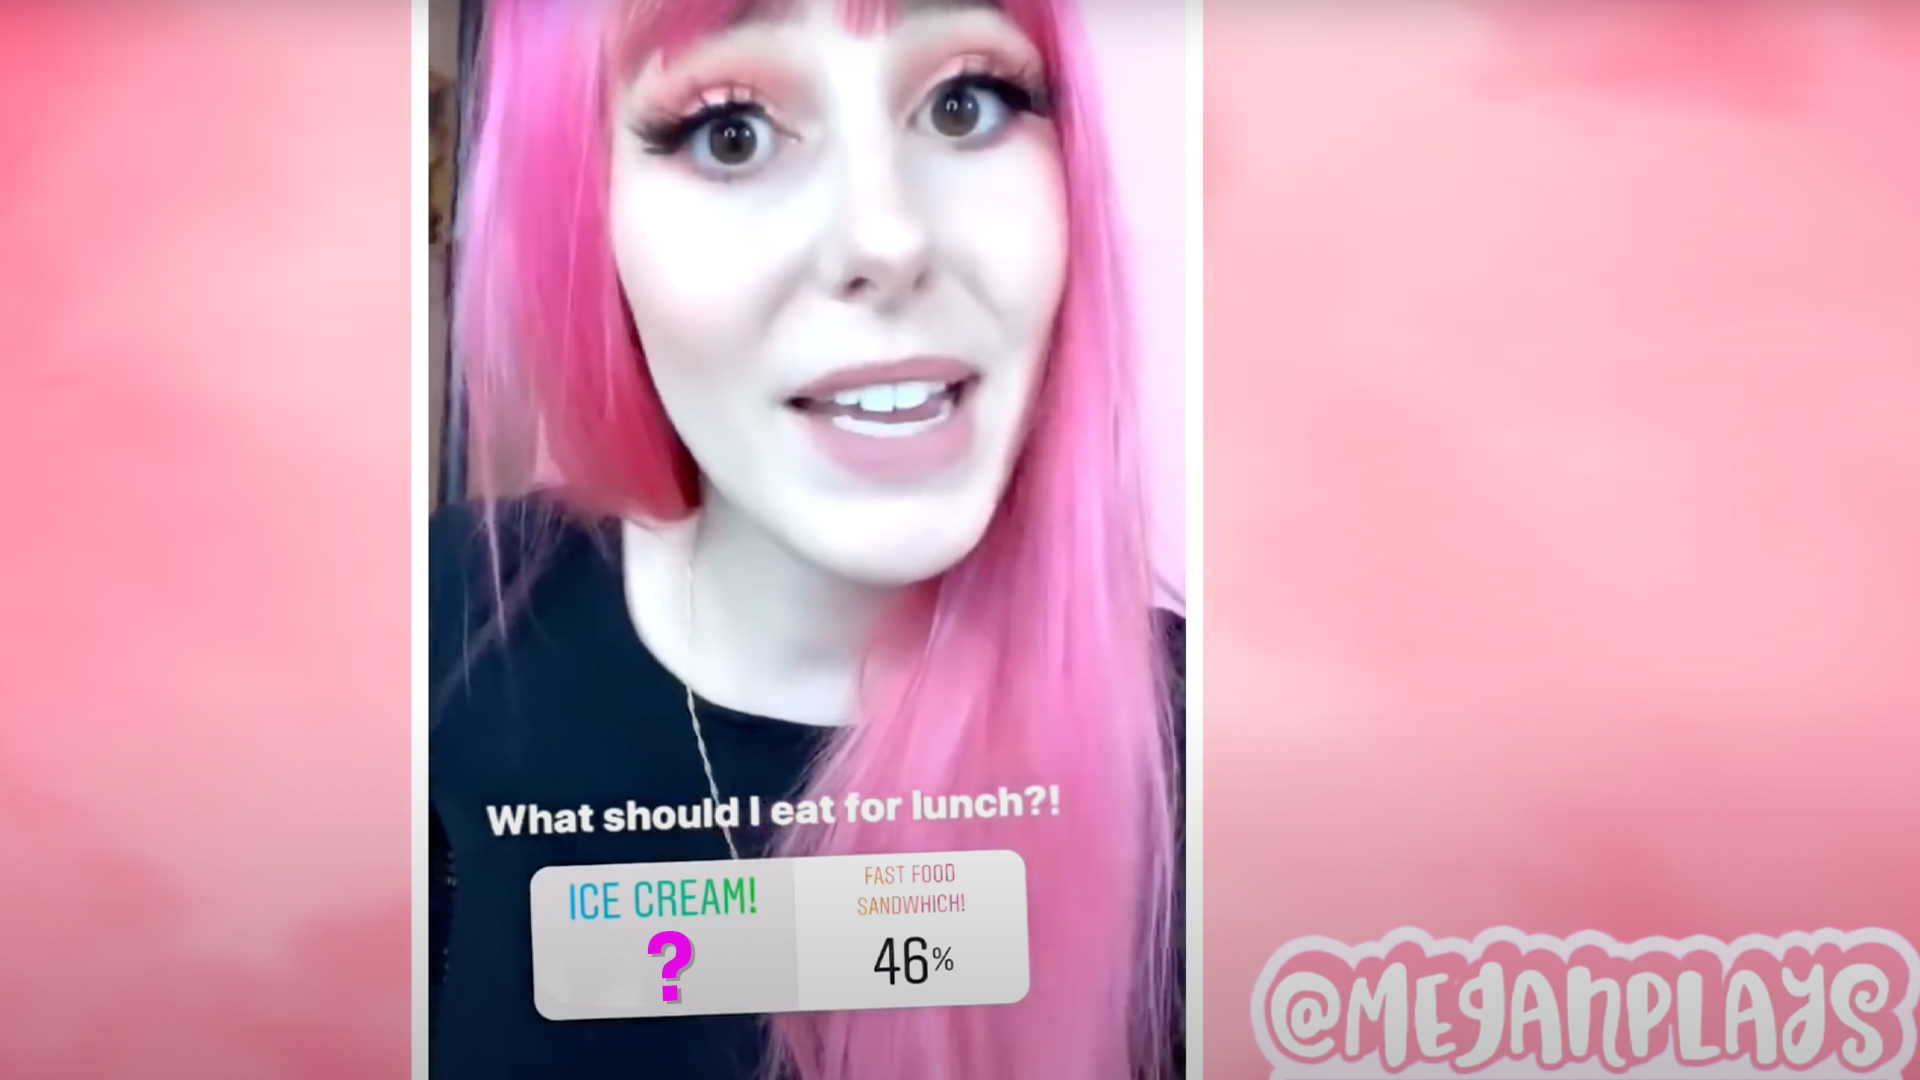 MeganPlays fans vote for lunch